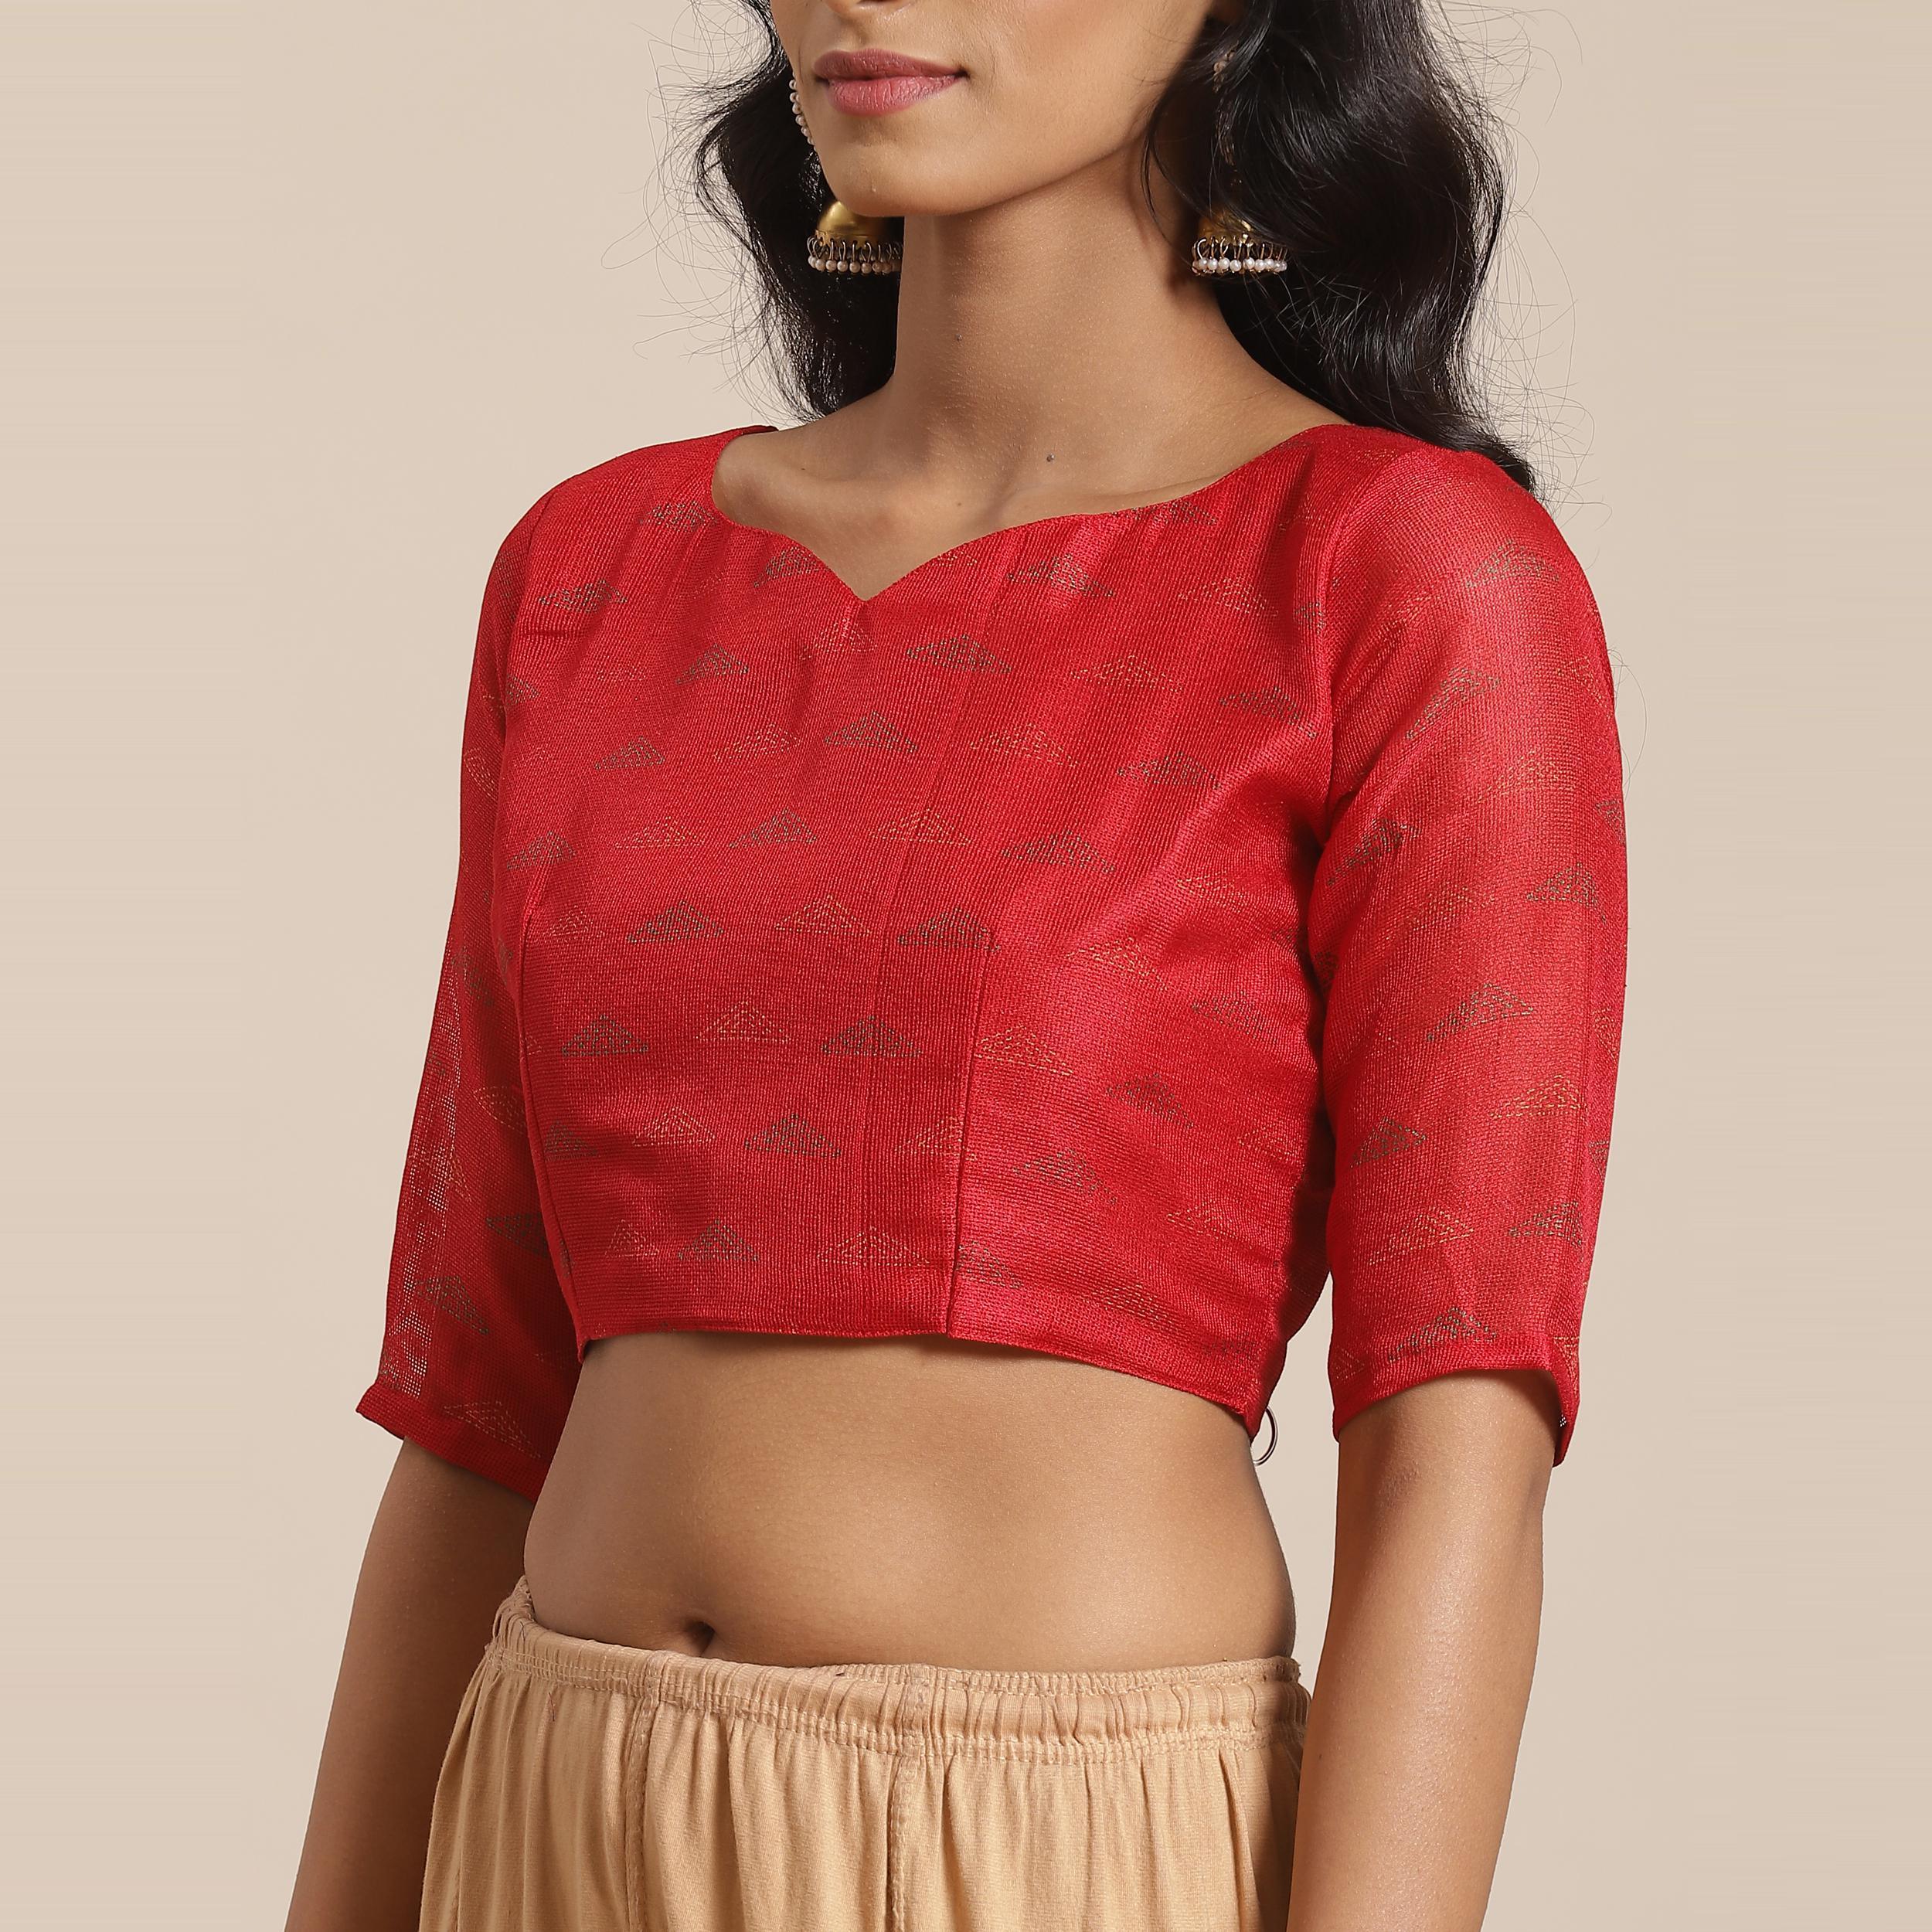 Charming Red Colored Casual Wear Printed Jute Silk Saree - Peachmode